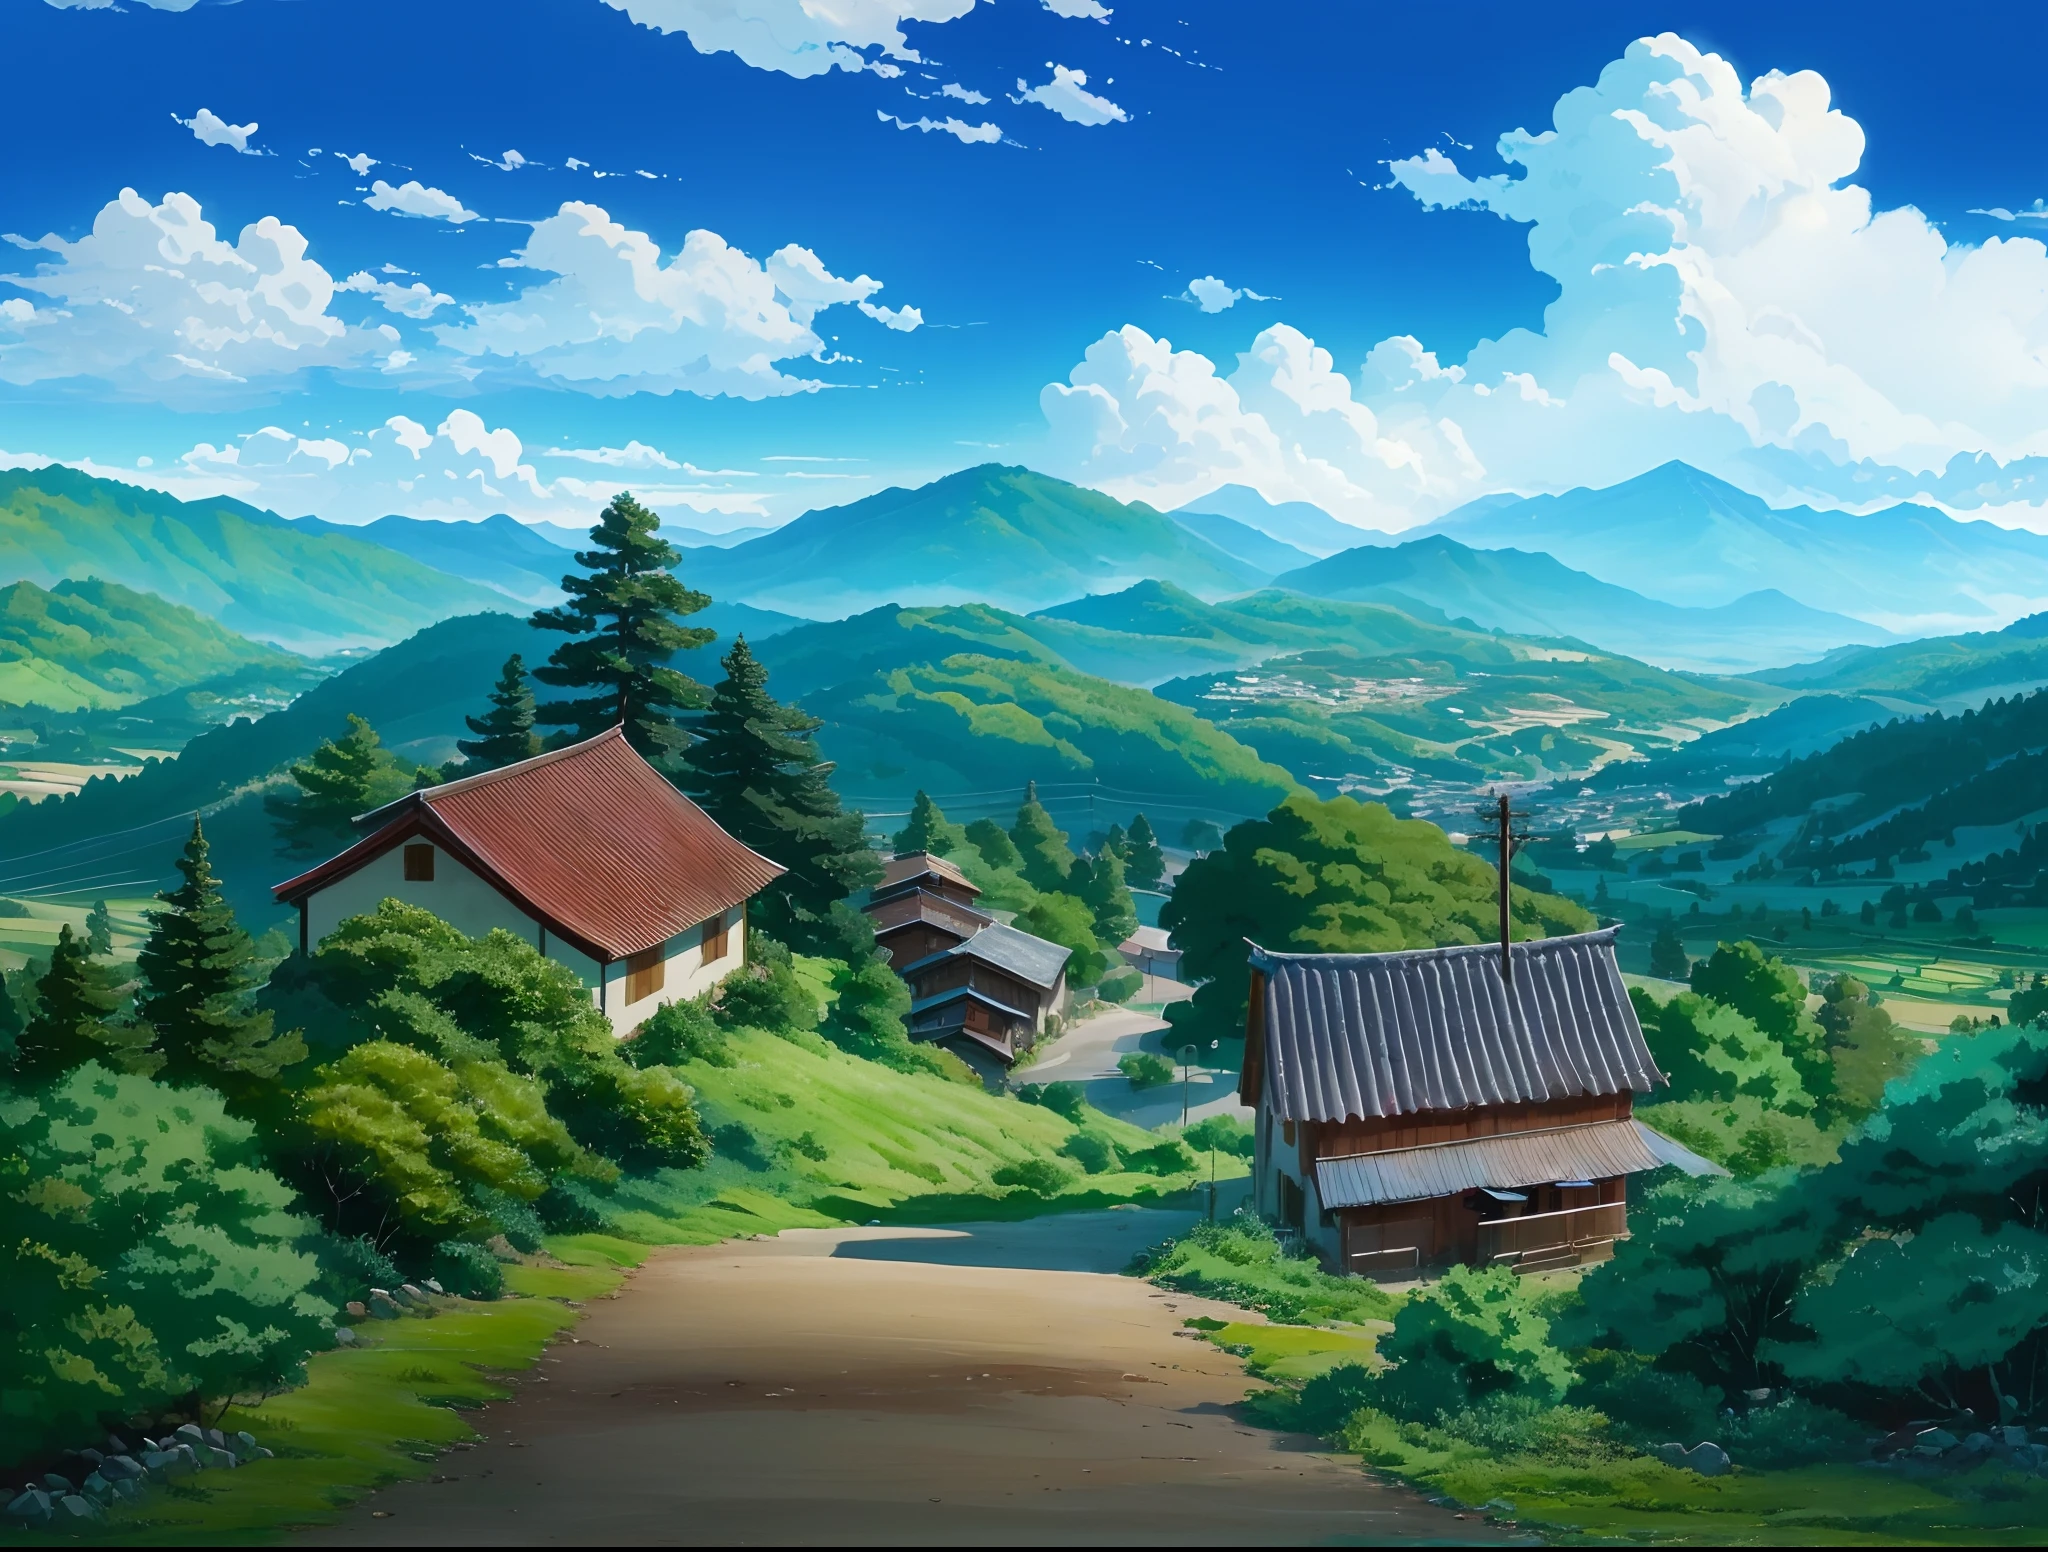 An awe-inspiring anime art nature setting featuring serene mountains